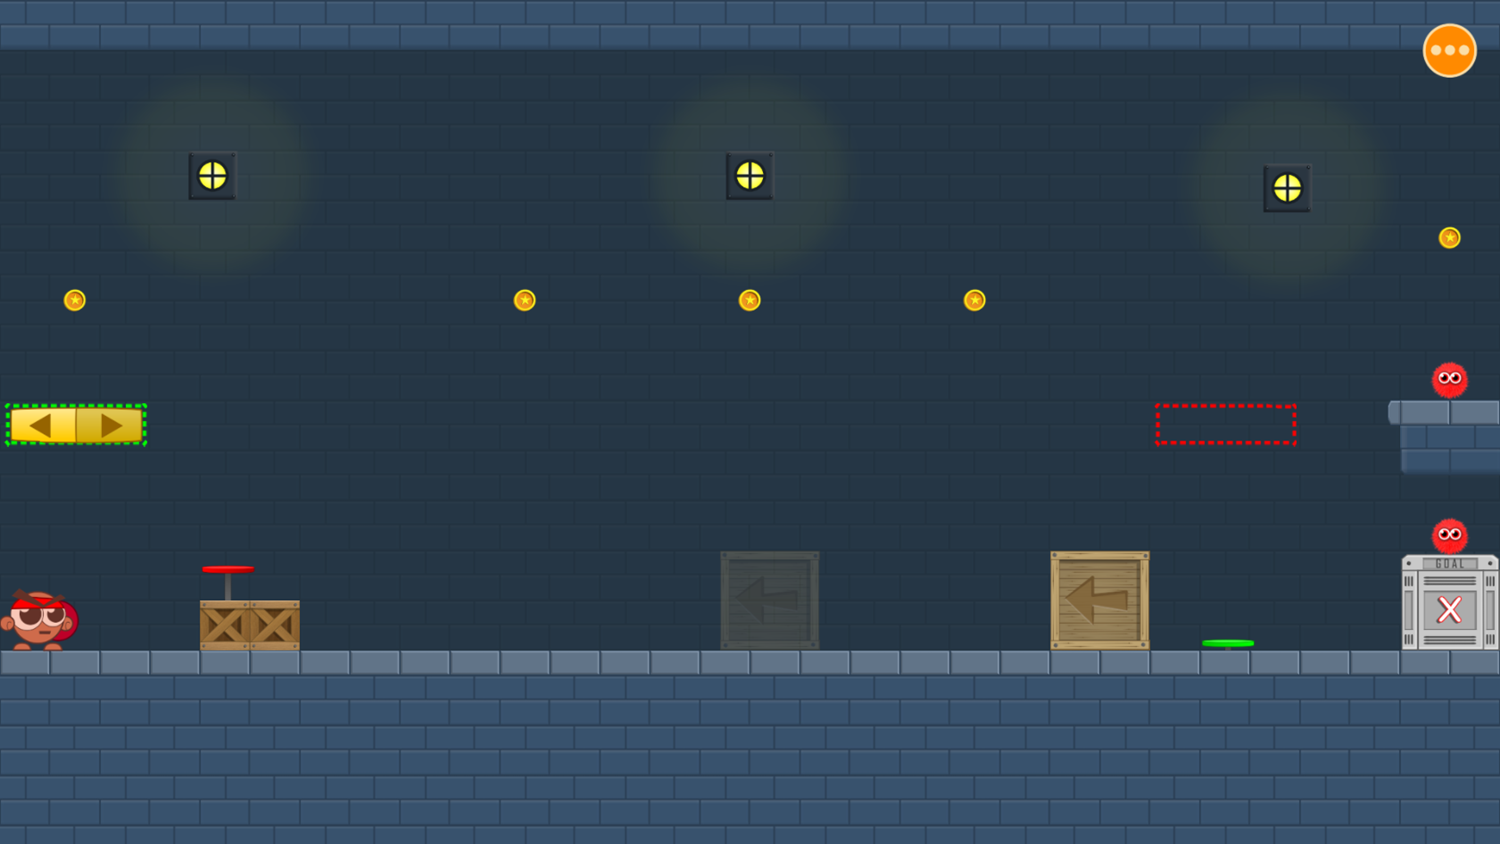 Lost Glider Game Level Progress Screenshot.